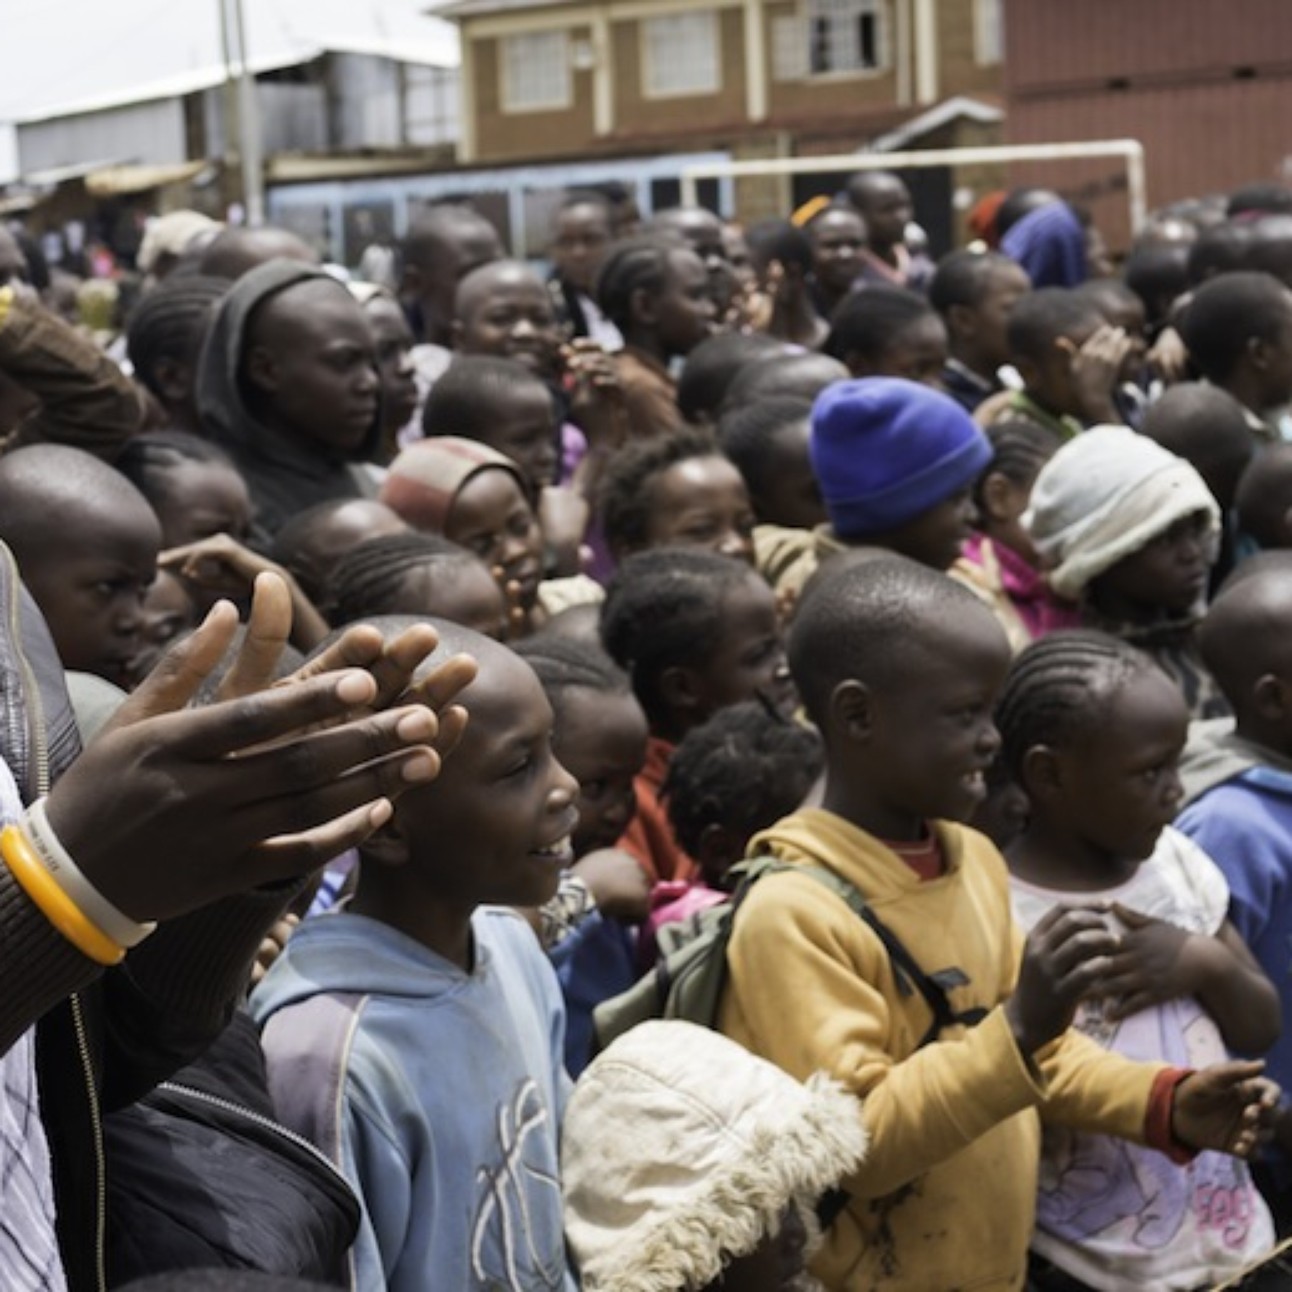 Peacetones - Kibera Crowds